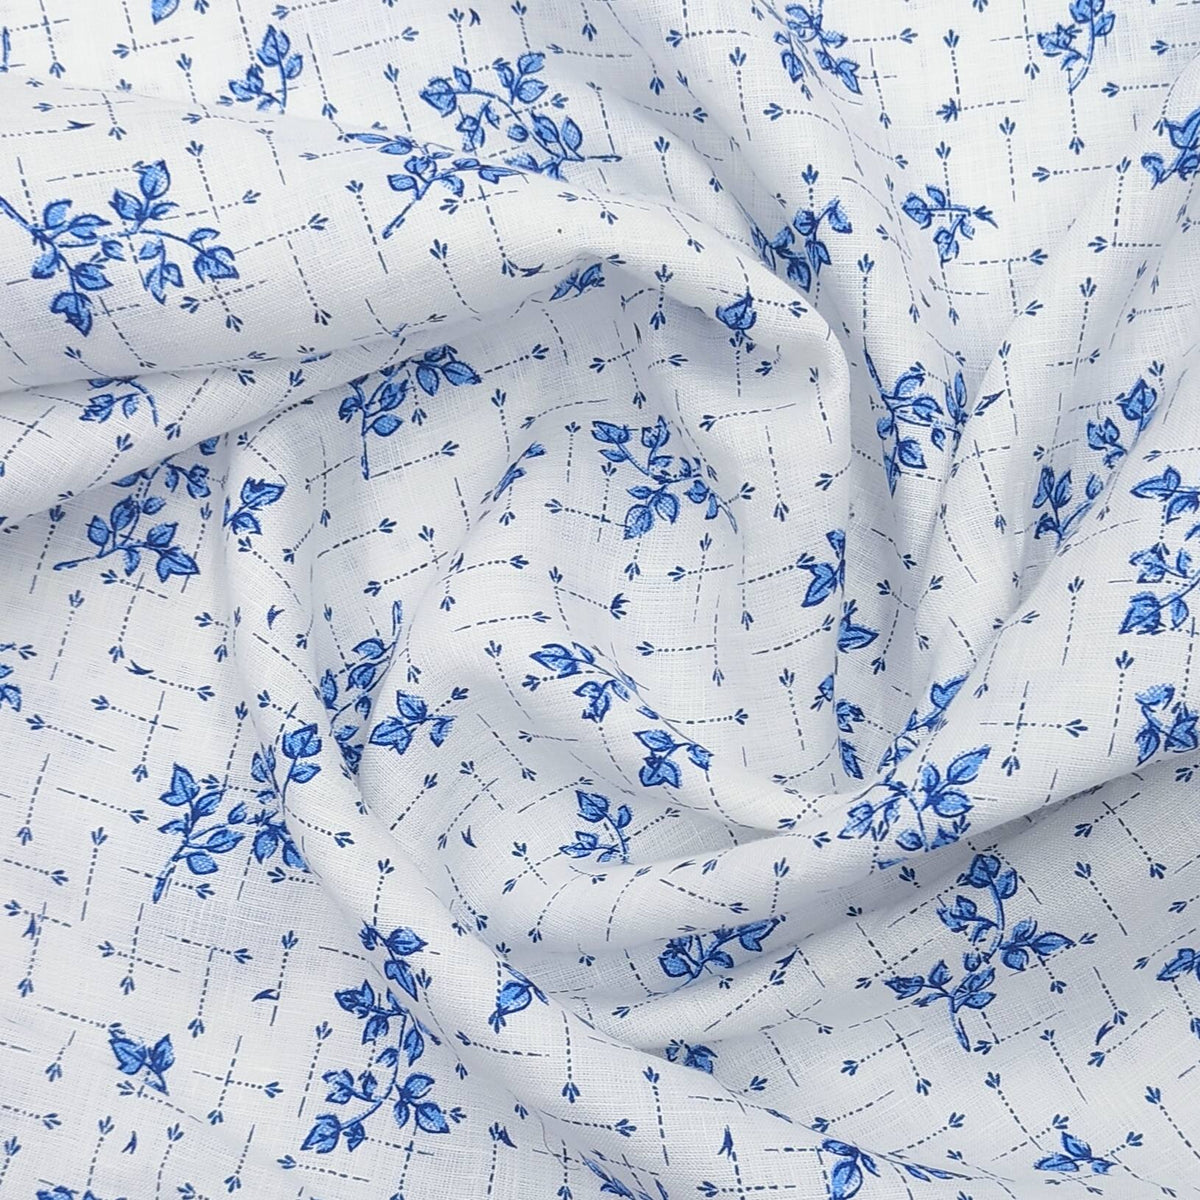 Solino 100% linen 60lea White printed Shirt Fabric